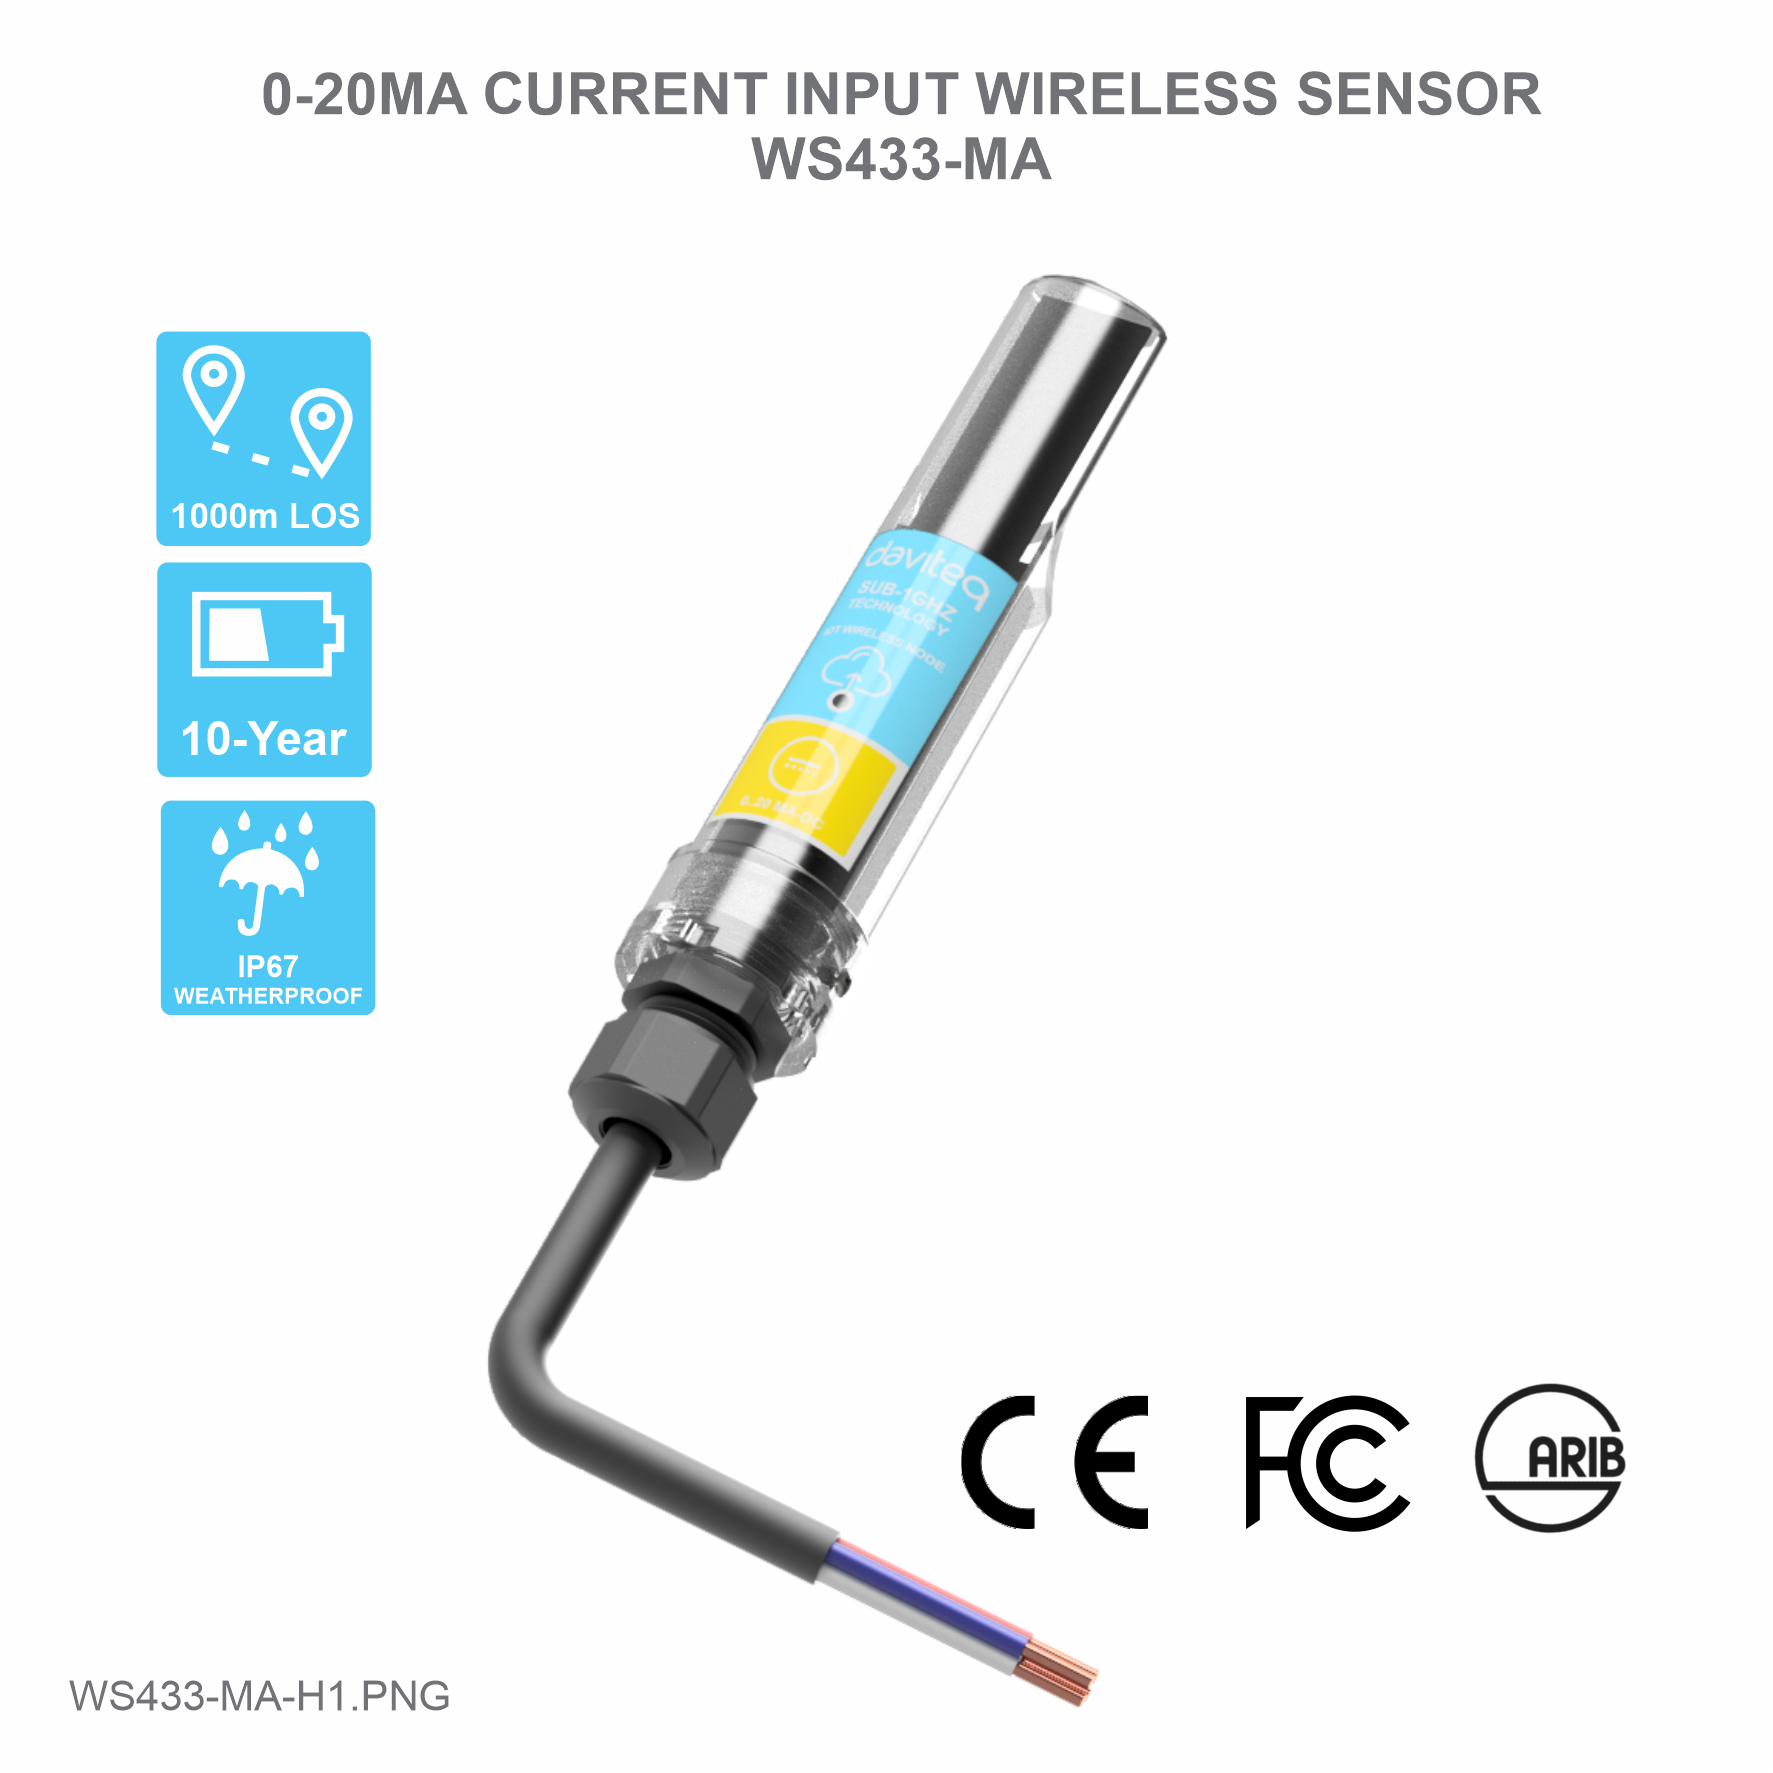 Wireless Sensor 0-20mA current input